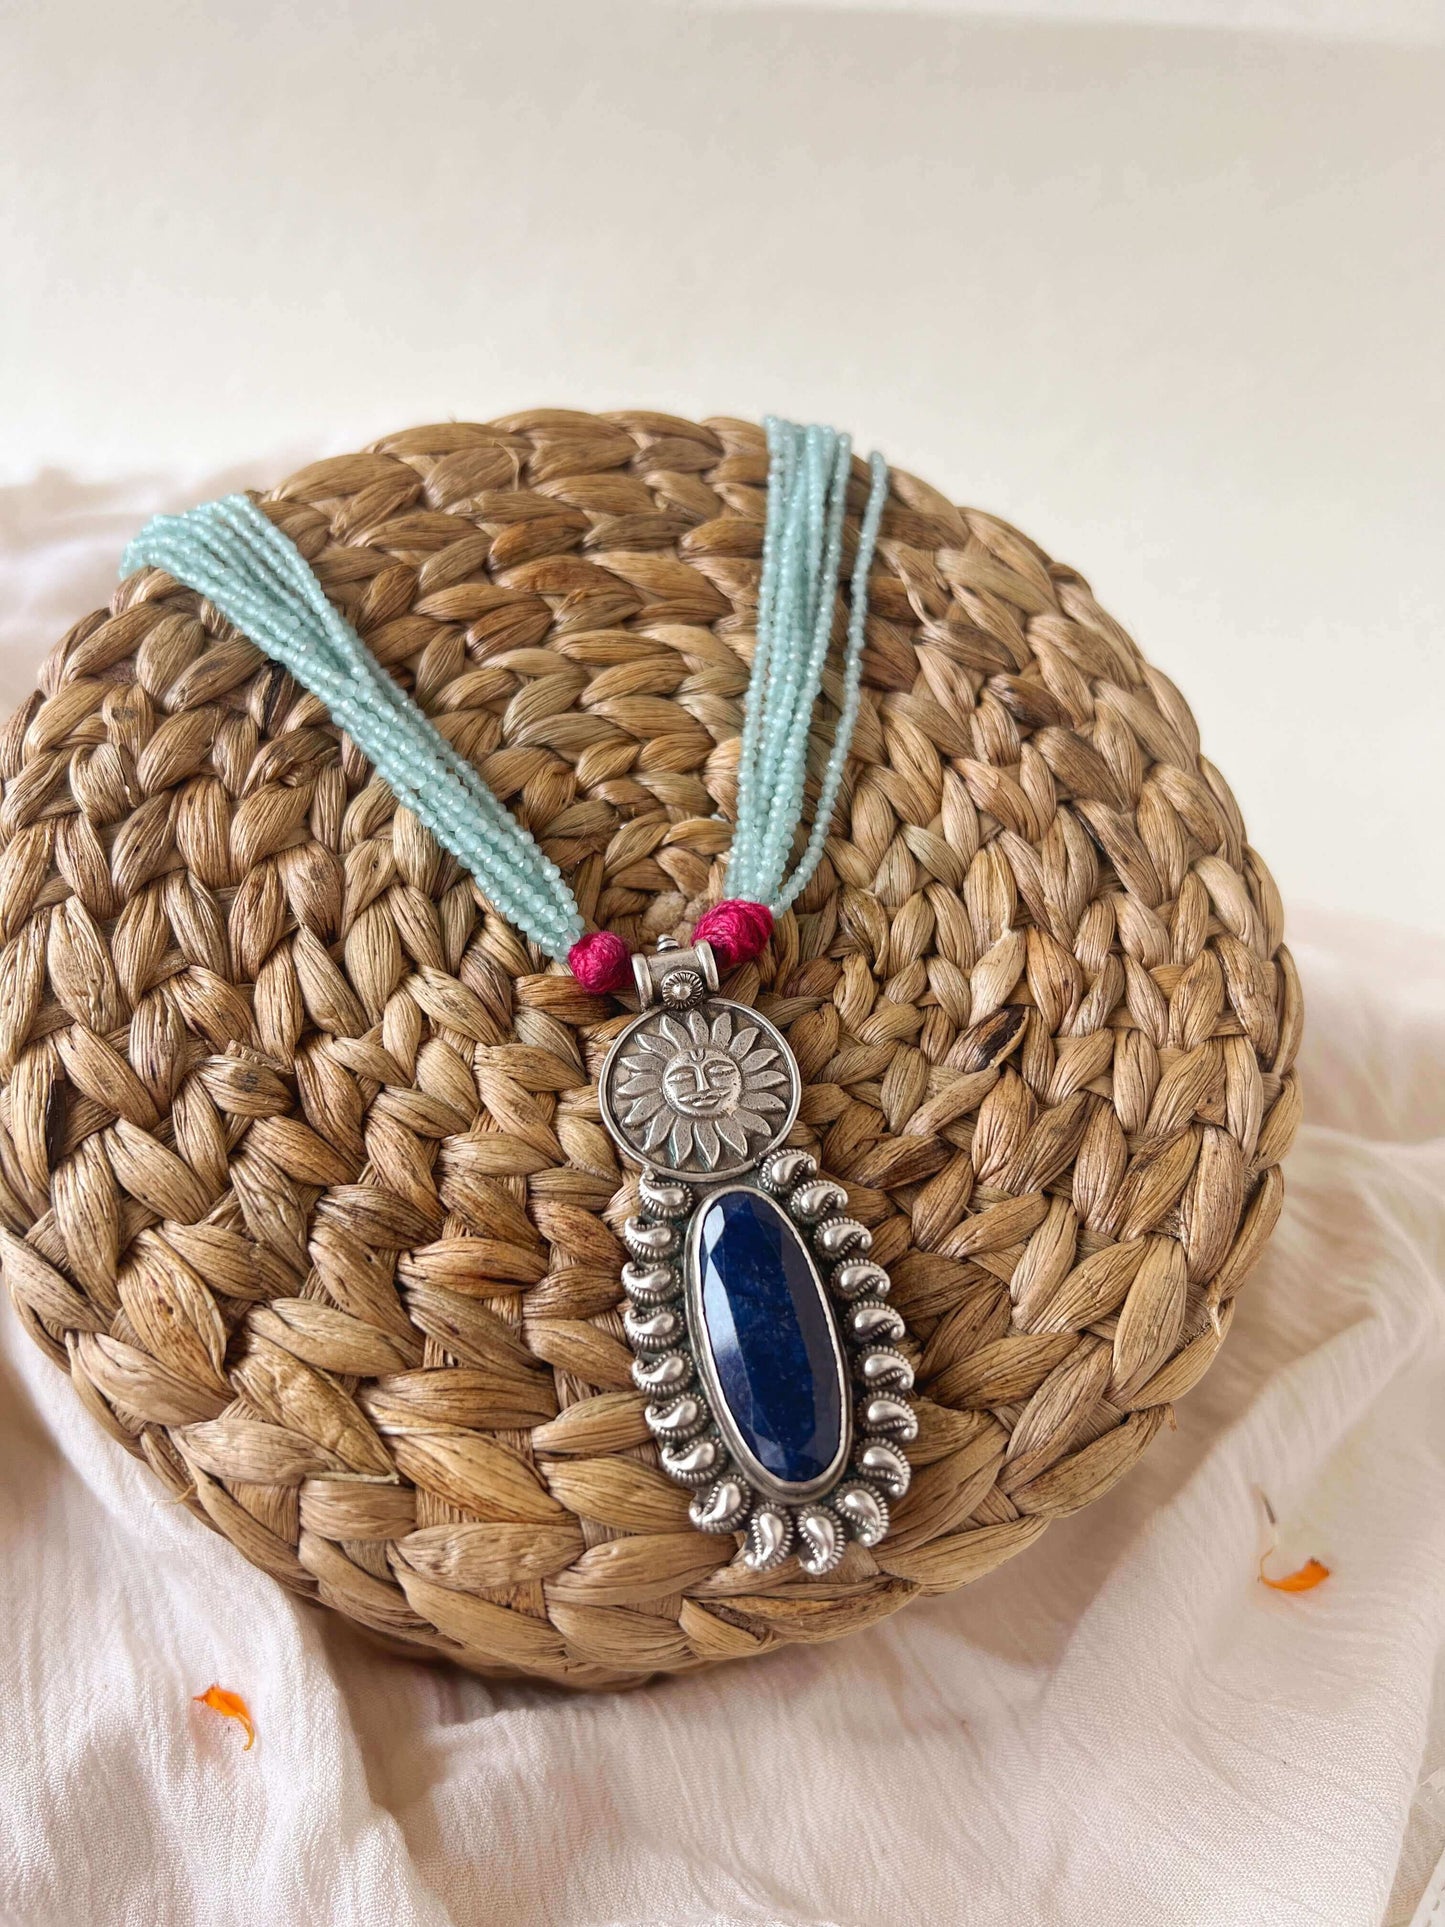 Shakti oxidised silver pendant with blue lapis lazuli